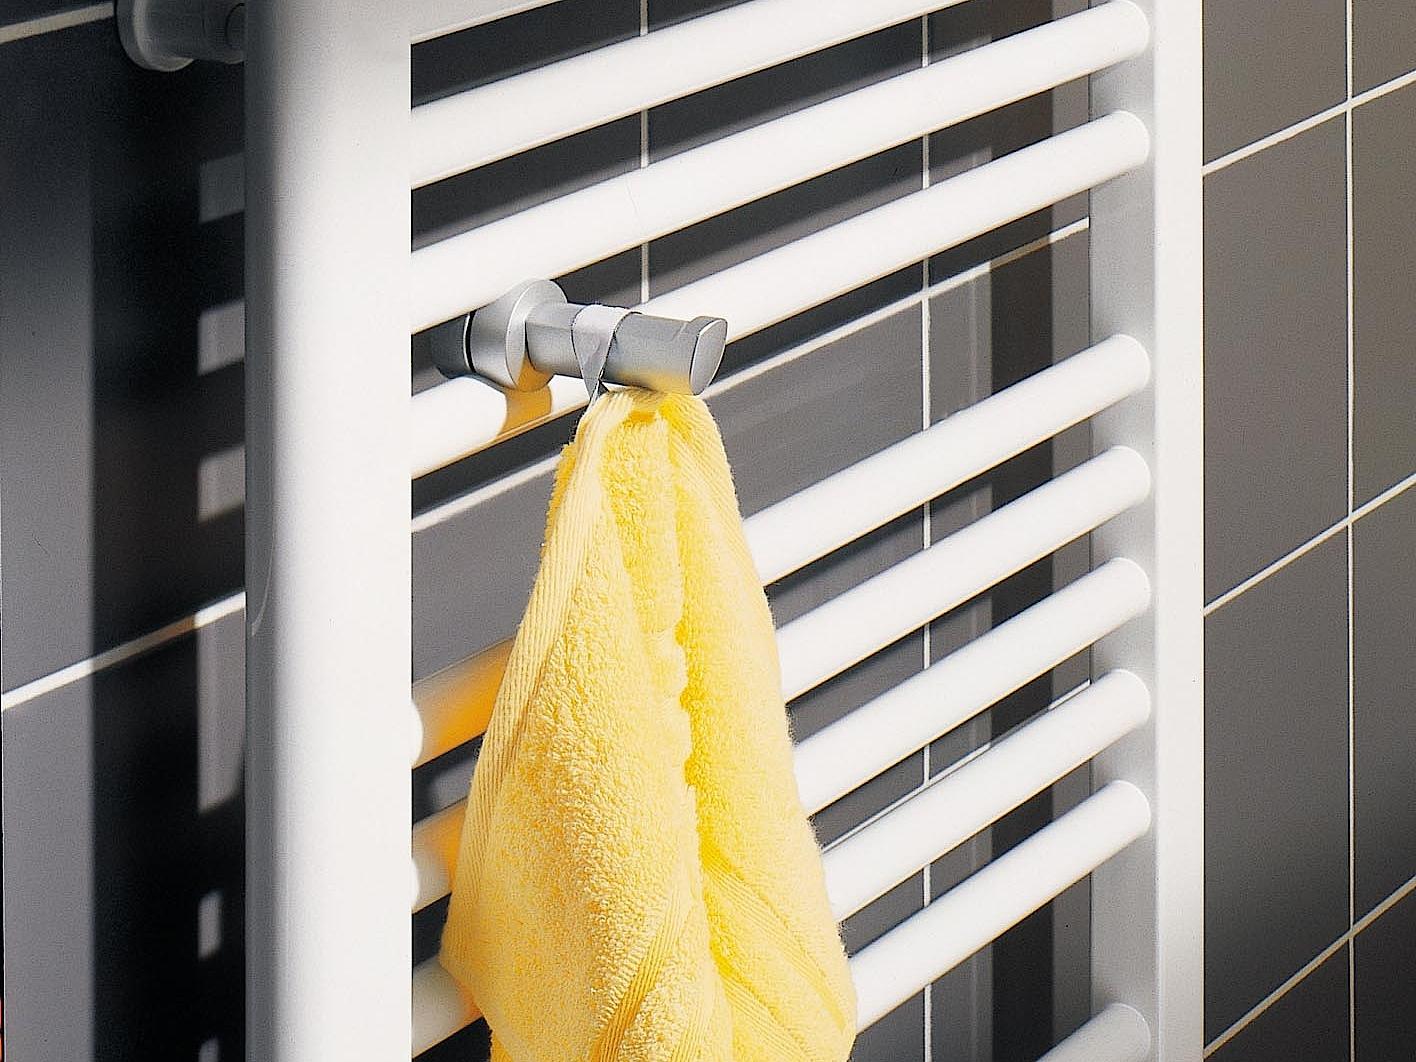 Towel rail for Kermi Basic-50 design and bathroom radiators, painted Aluminium or Chrome-plated.